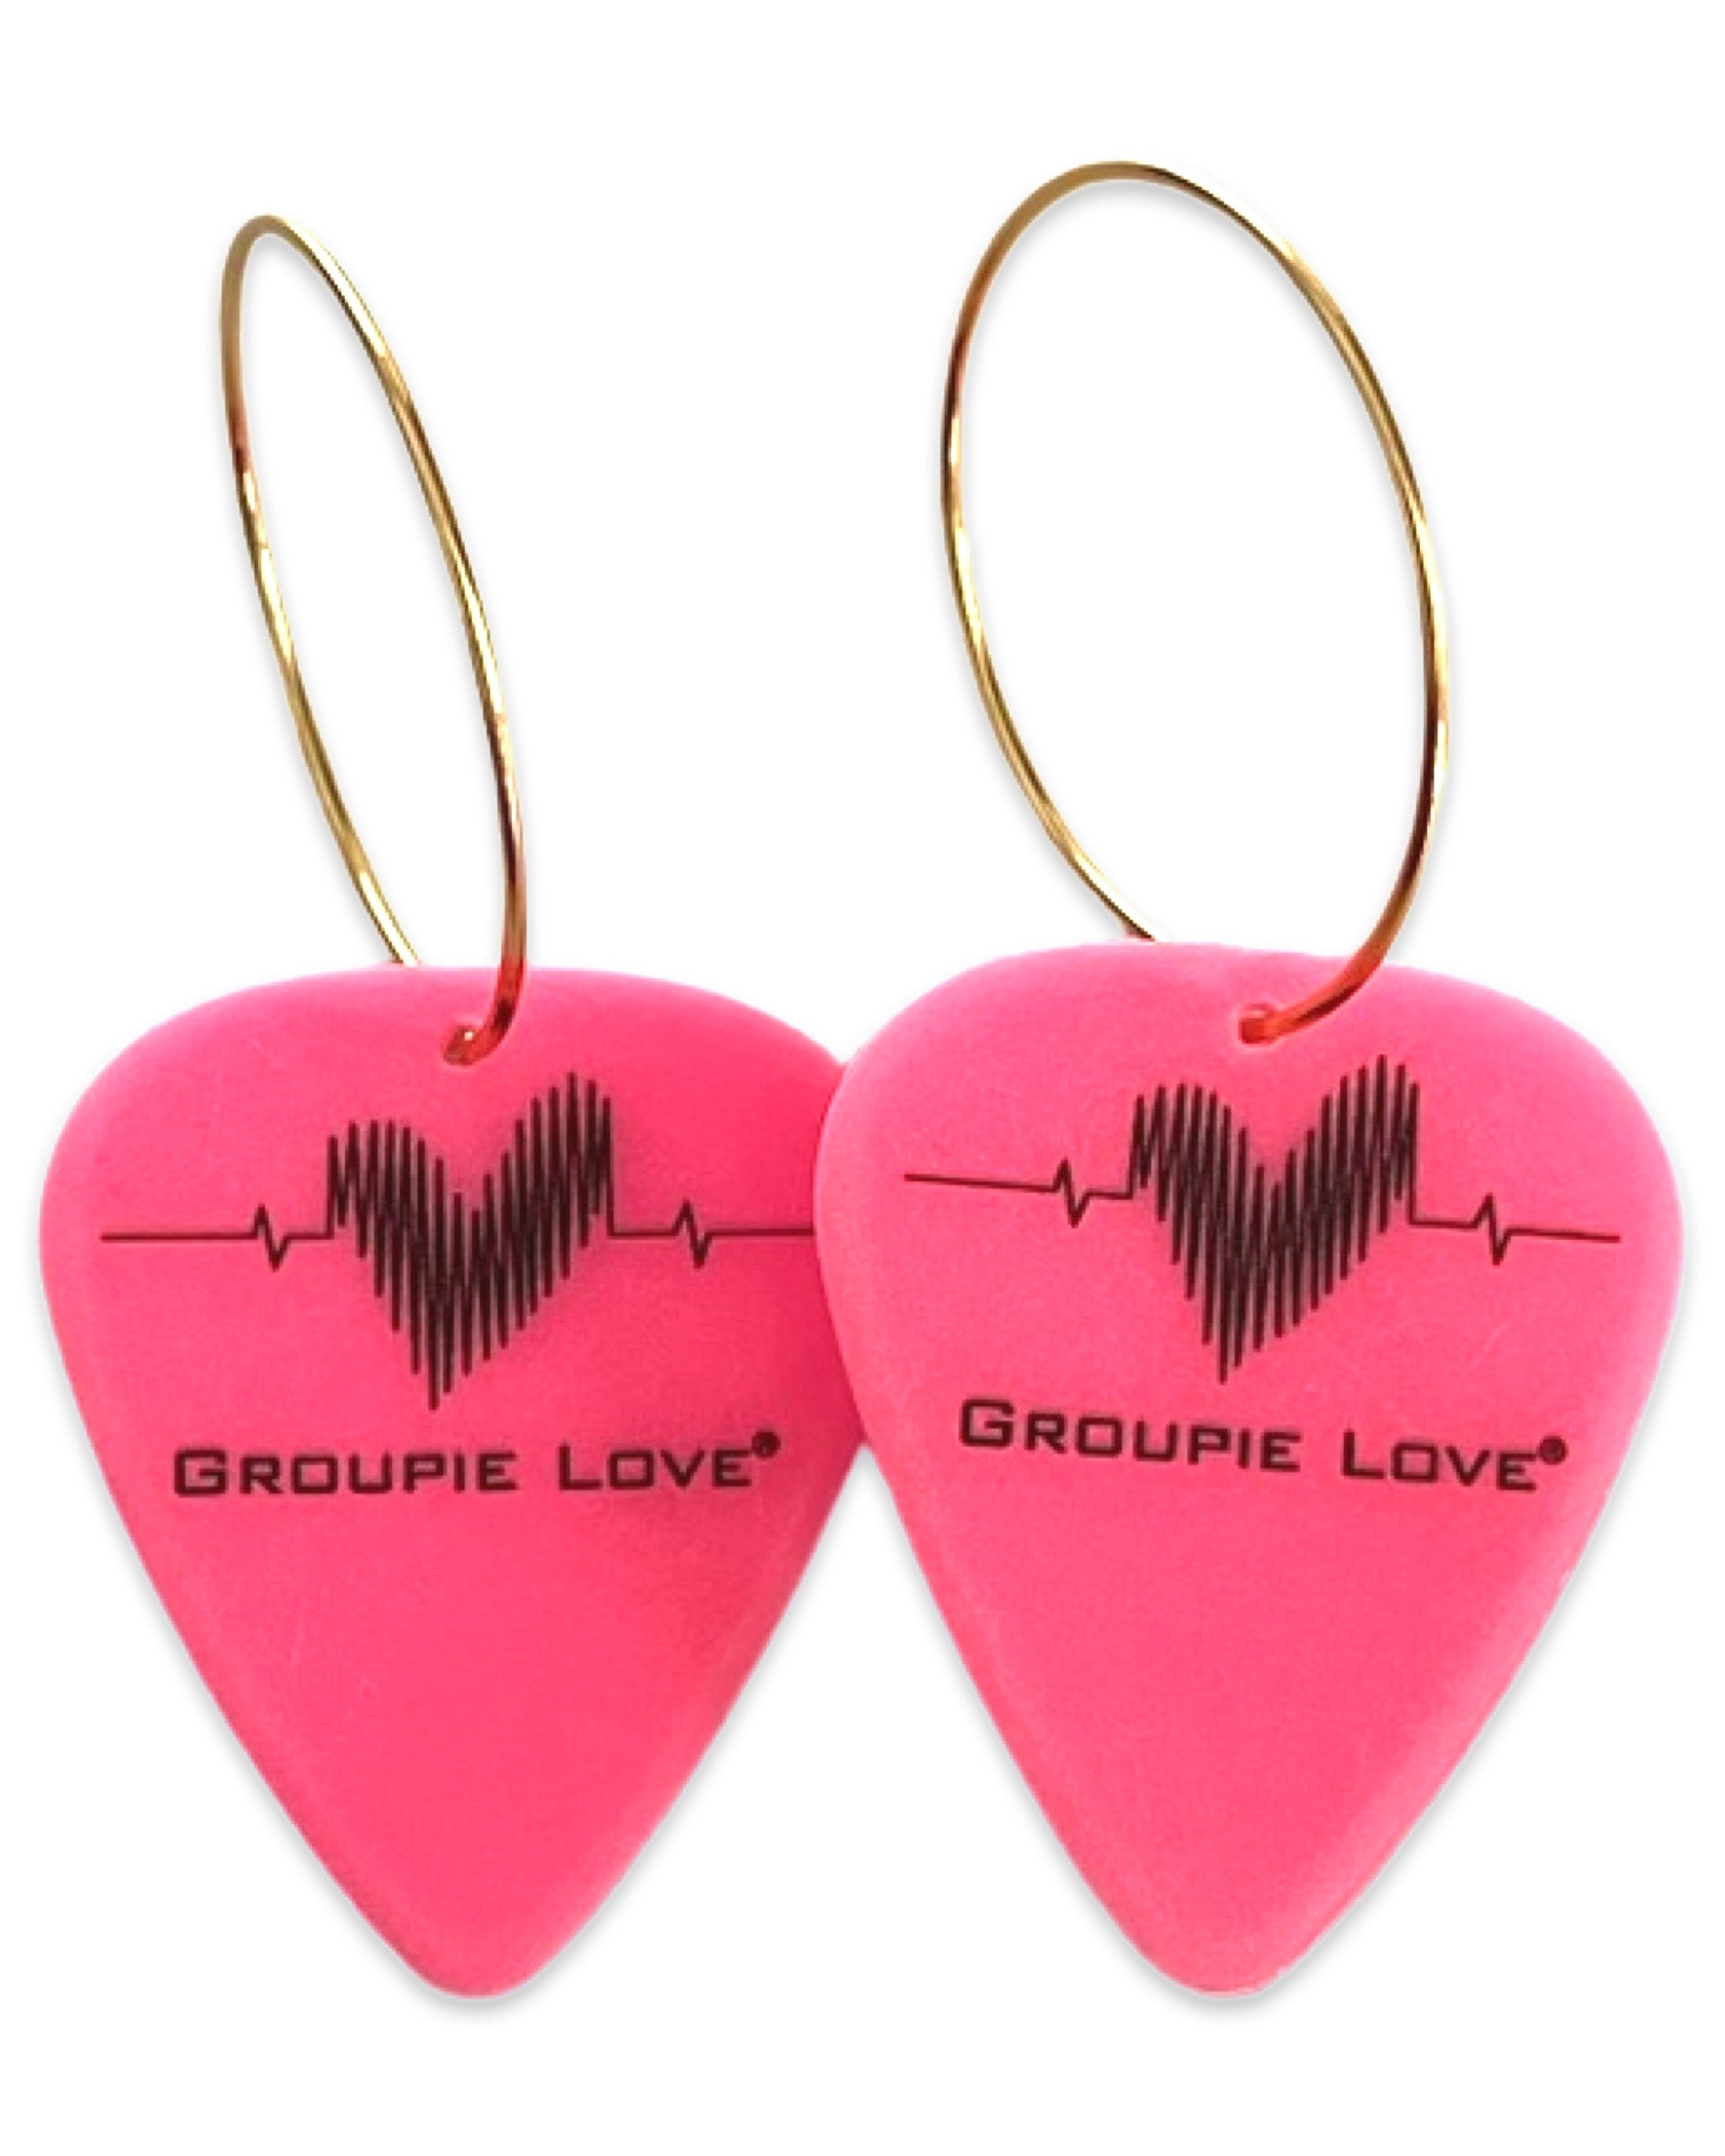 Groupie Love Neon Pink Single Guitar Pick Earrings